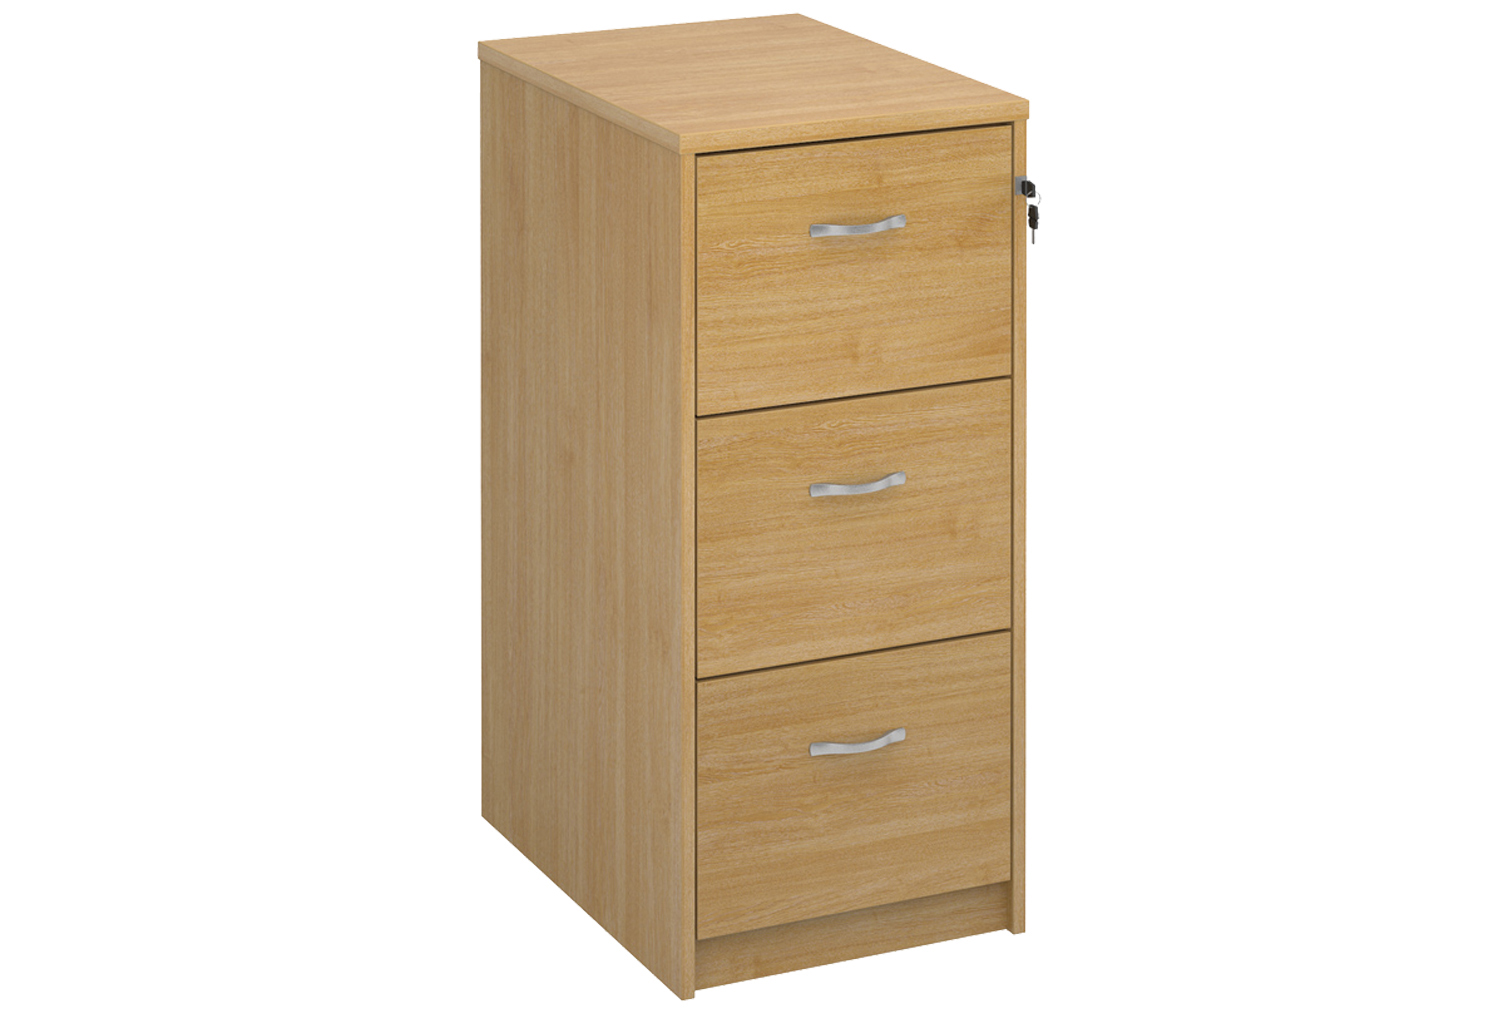 Wooden Filing Cabinets, 3 Drawer - 48wx66dx105h (cm), Oak, Fully Installed